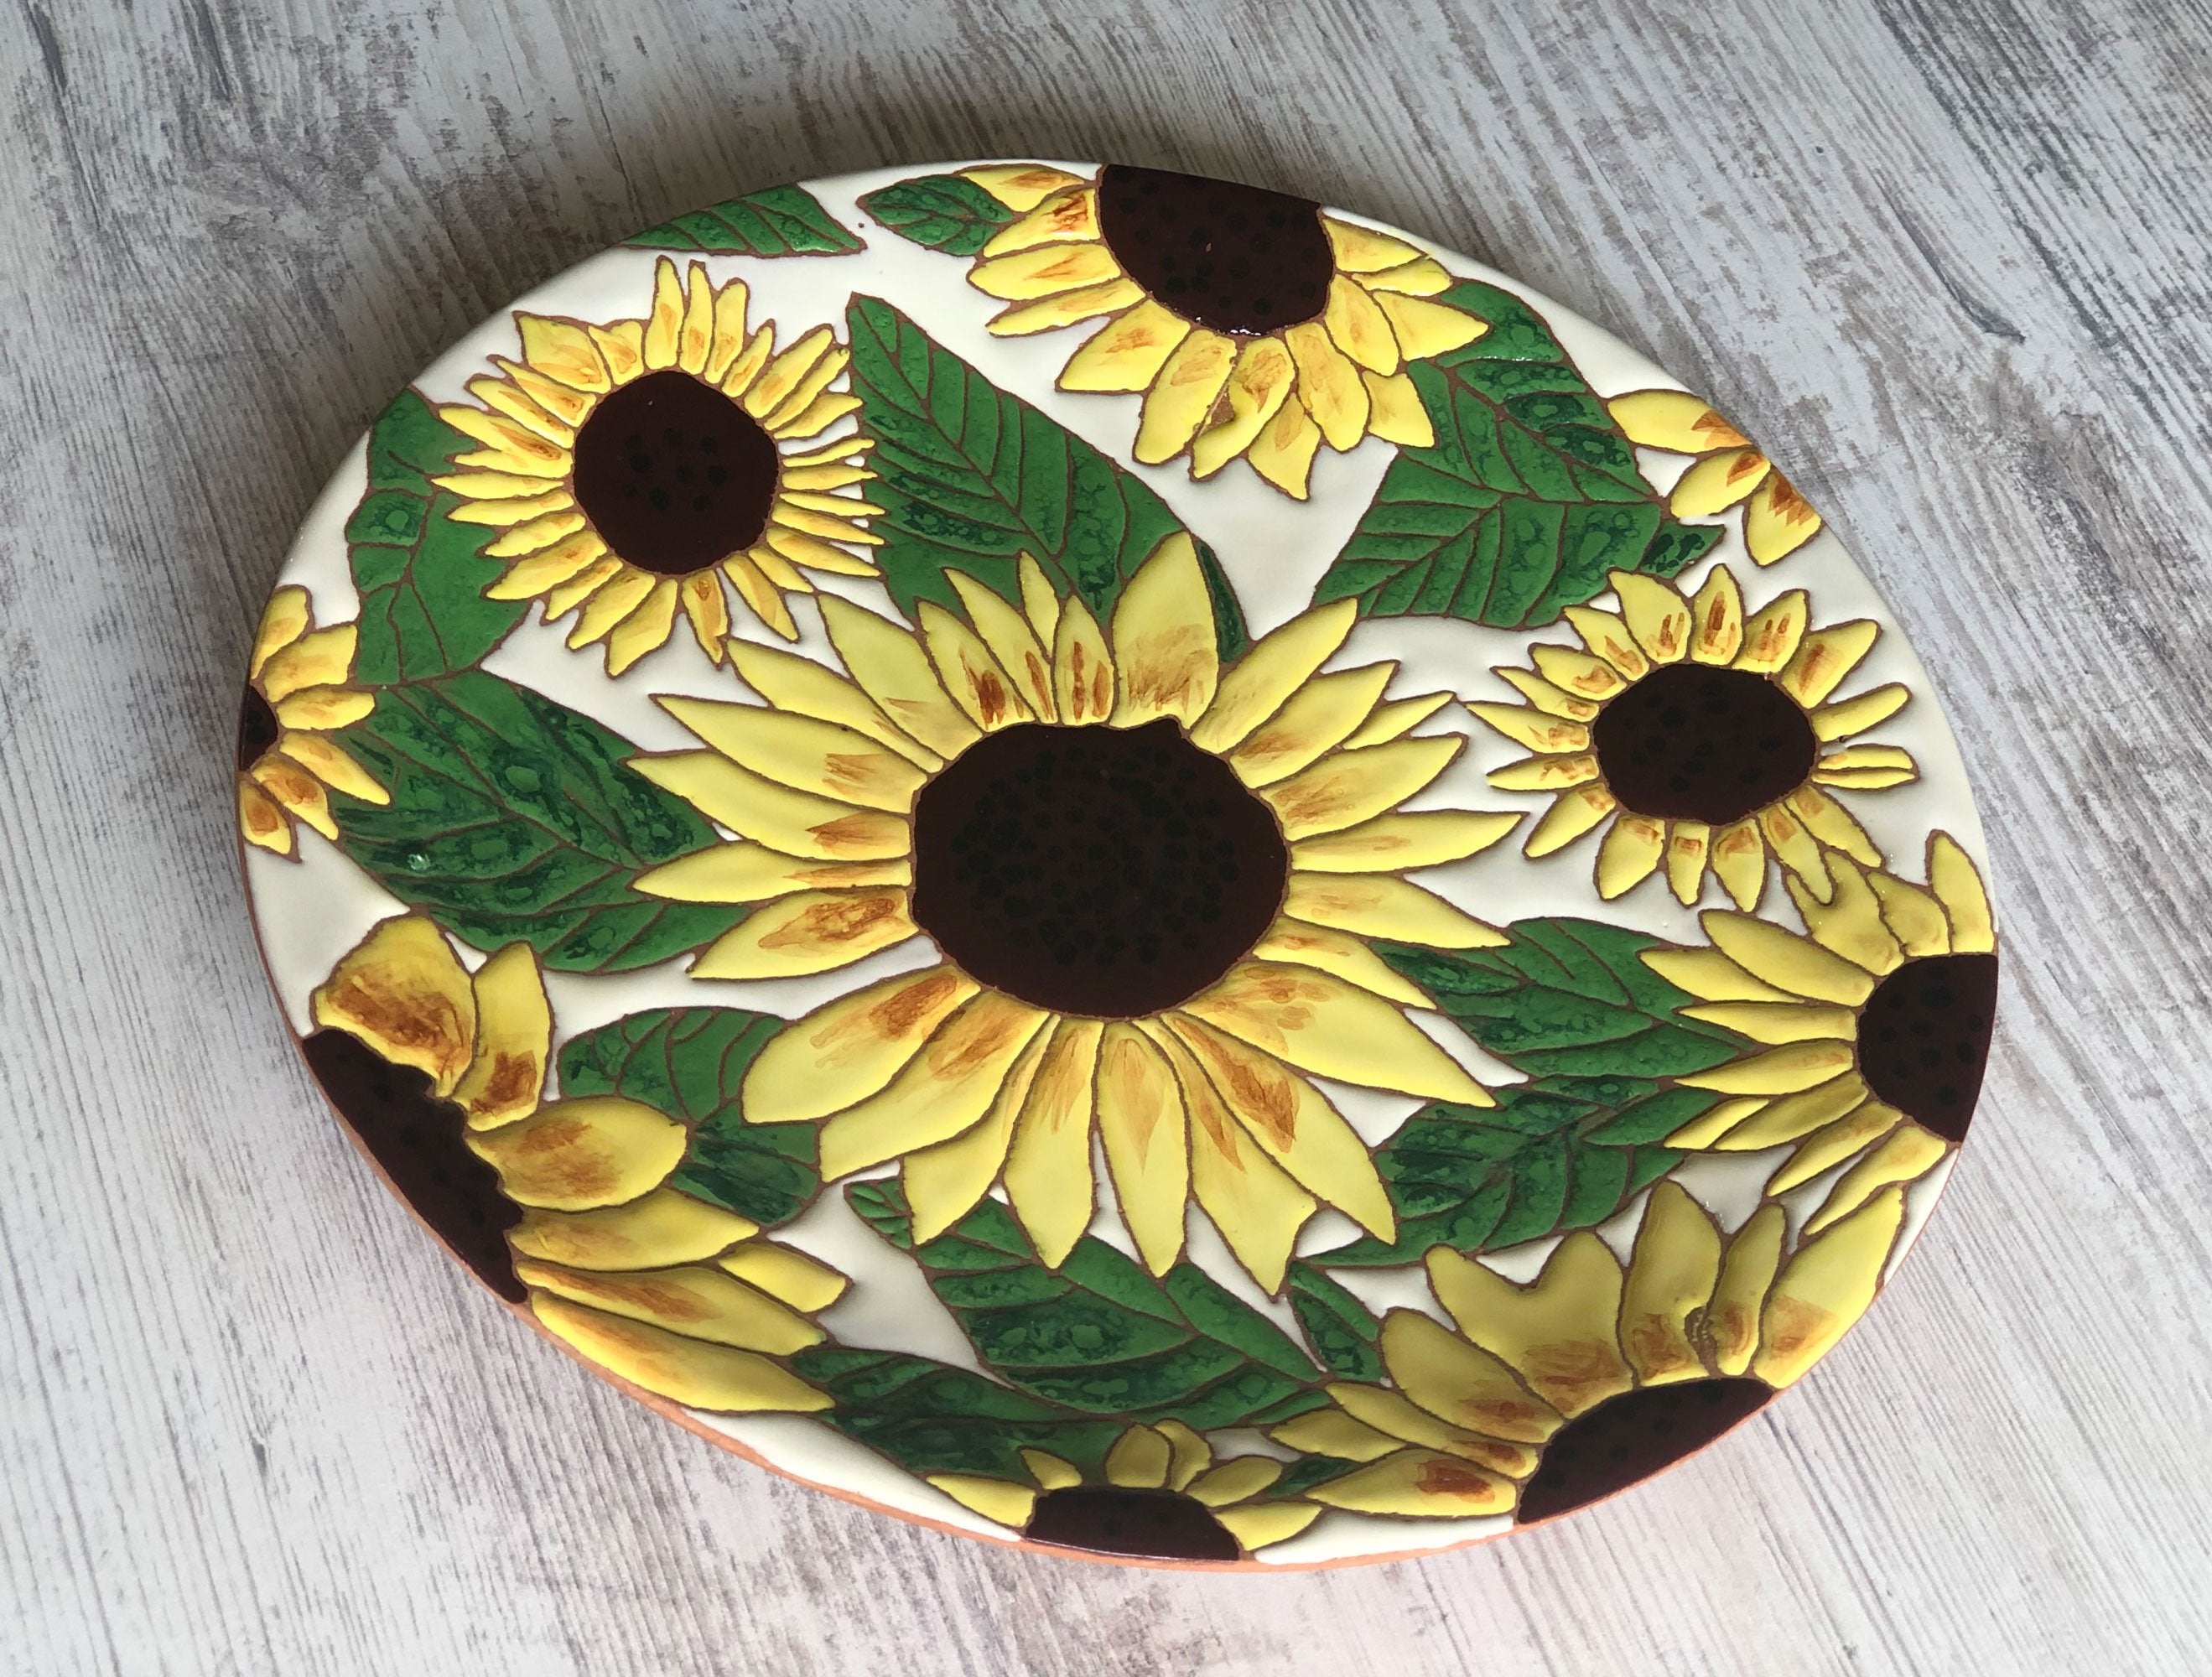 Mane Tiles Ceramic Plate - Sunflowers